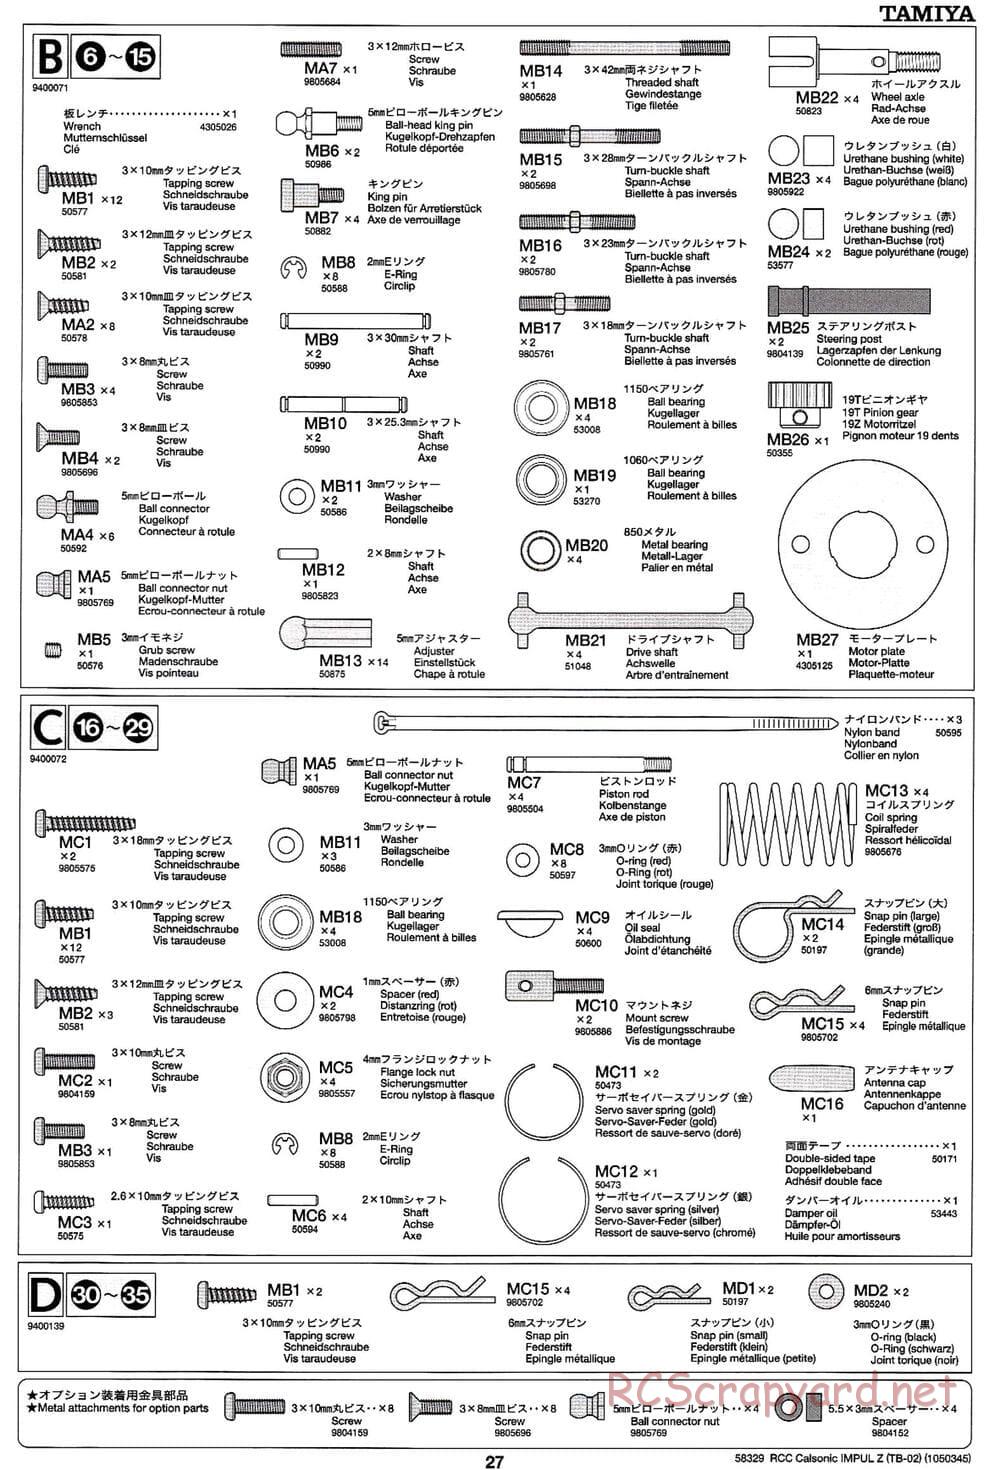 Tamiya - Calsonic Impul Z - TB-02 Chassis - Manual - Page 27